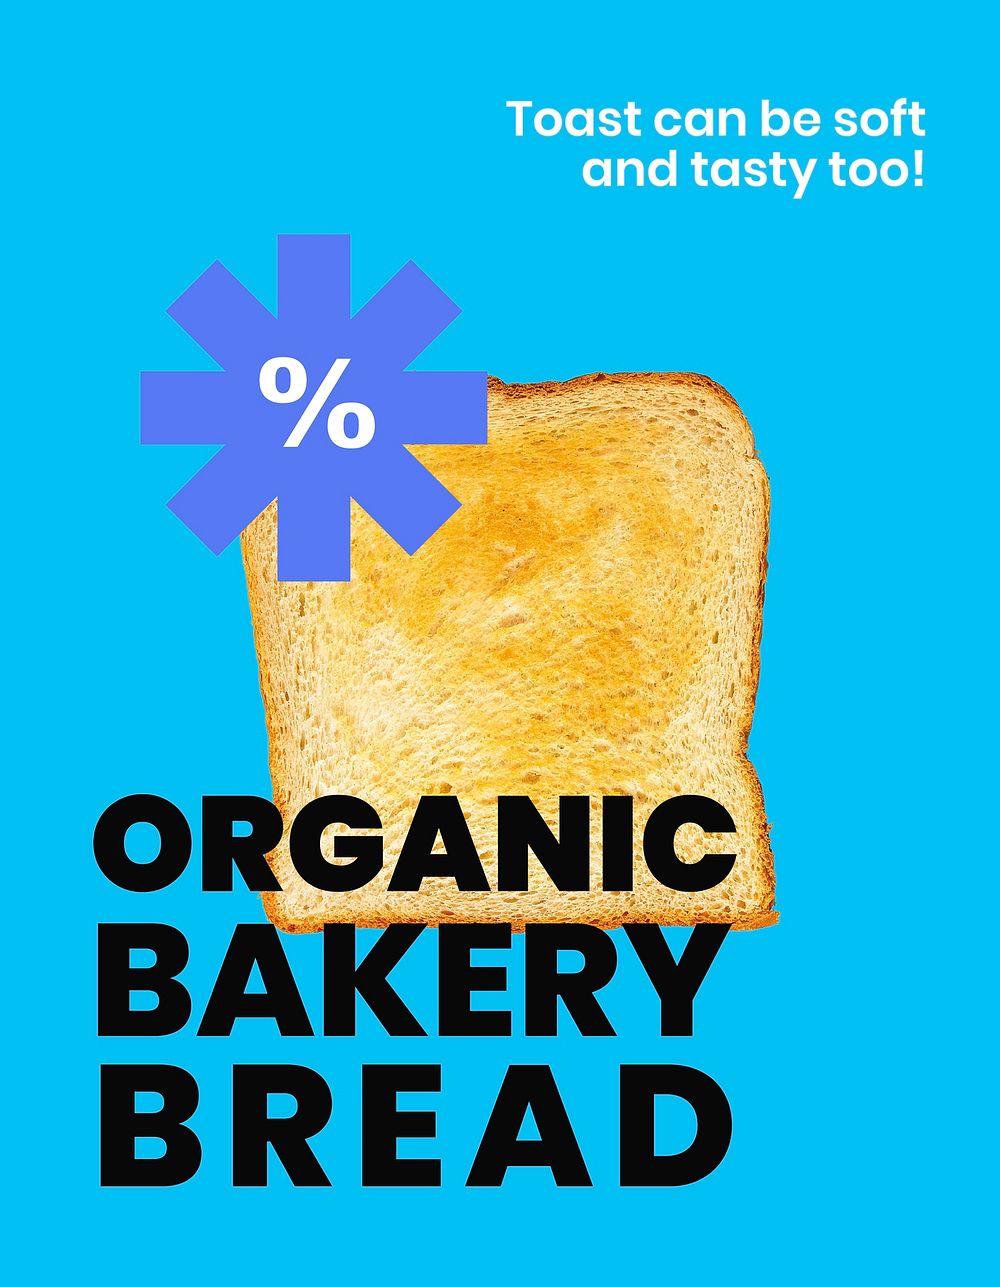 Toast breakfast flyer editable template, bakery advertisement psd